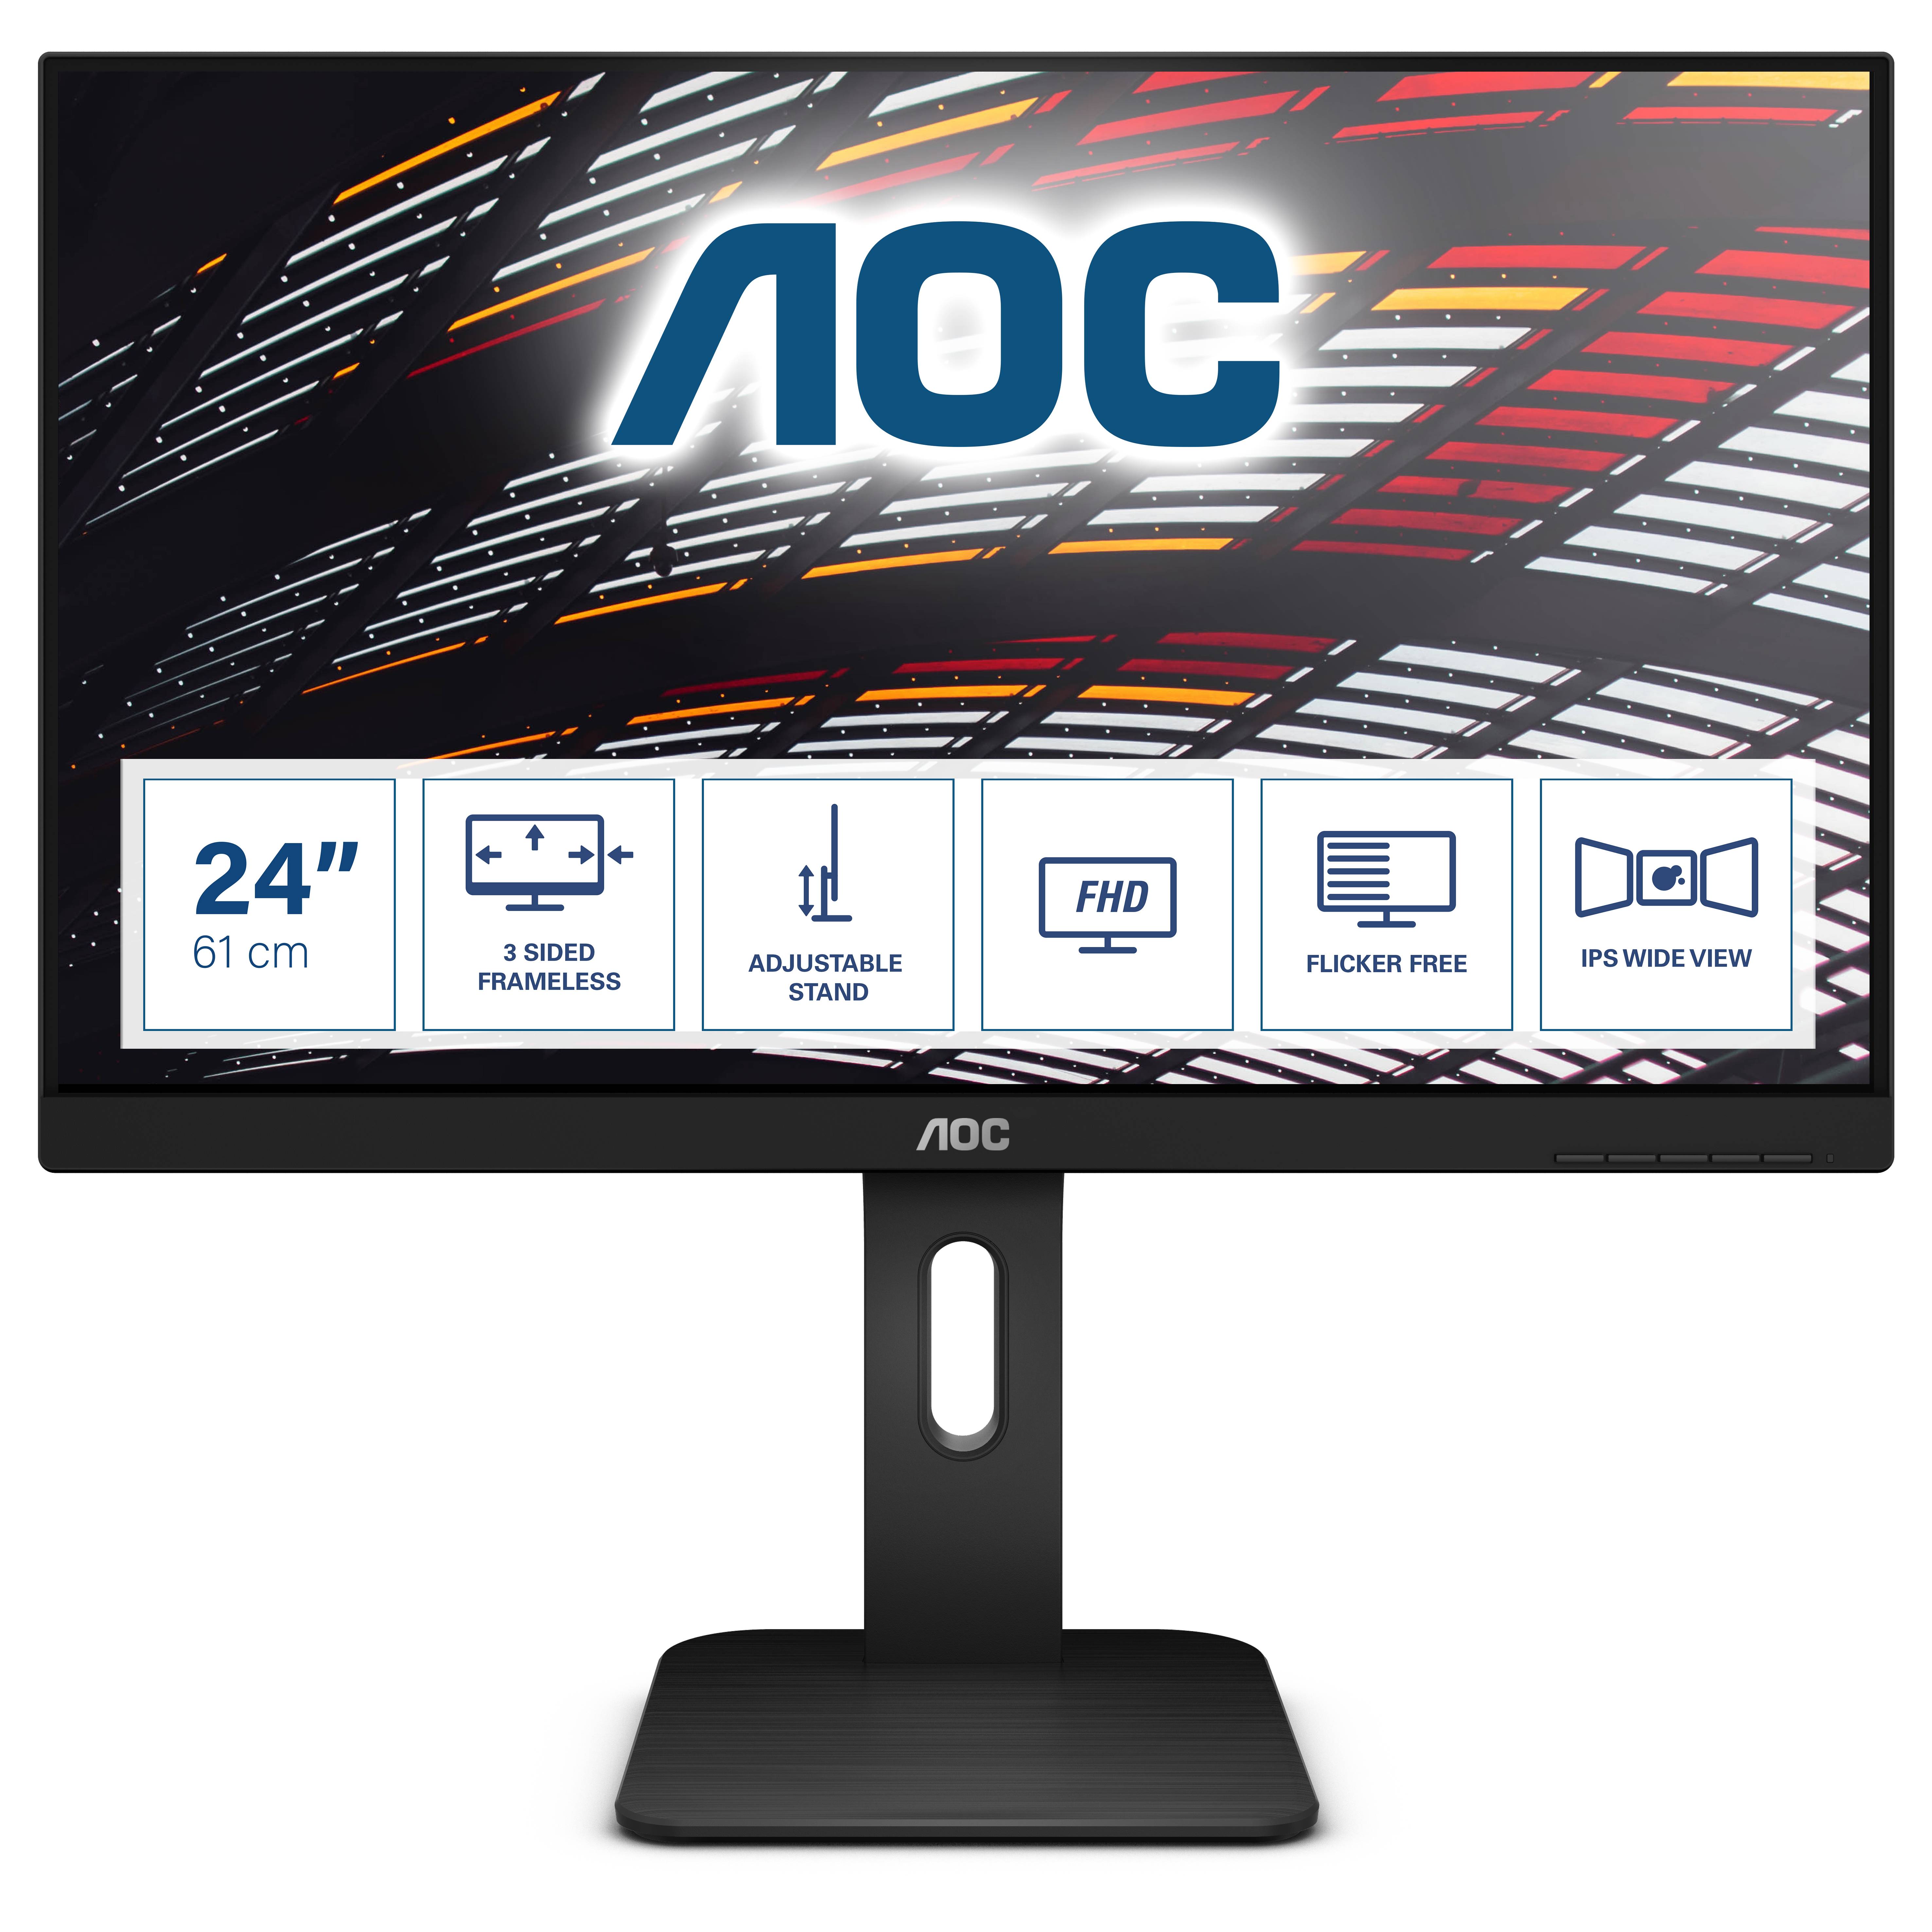 Rca Informatique - image du produit : 24IN LCD 1920X1200 16.10 4MS X24P1 2000:1 VGA/DHMI